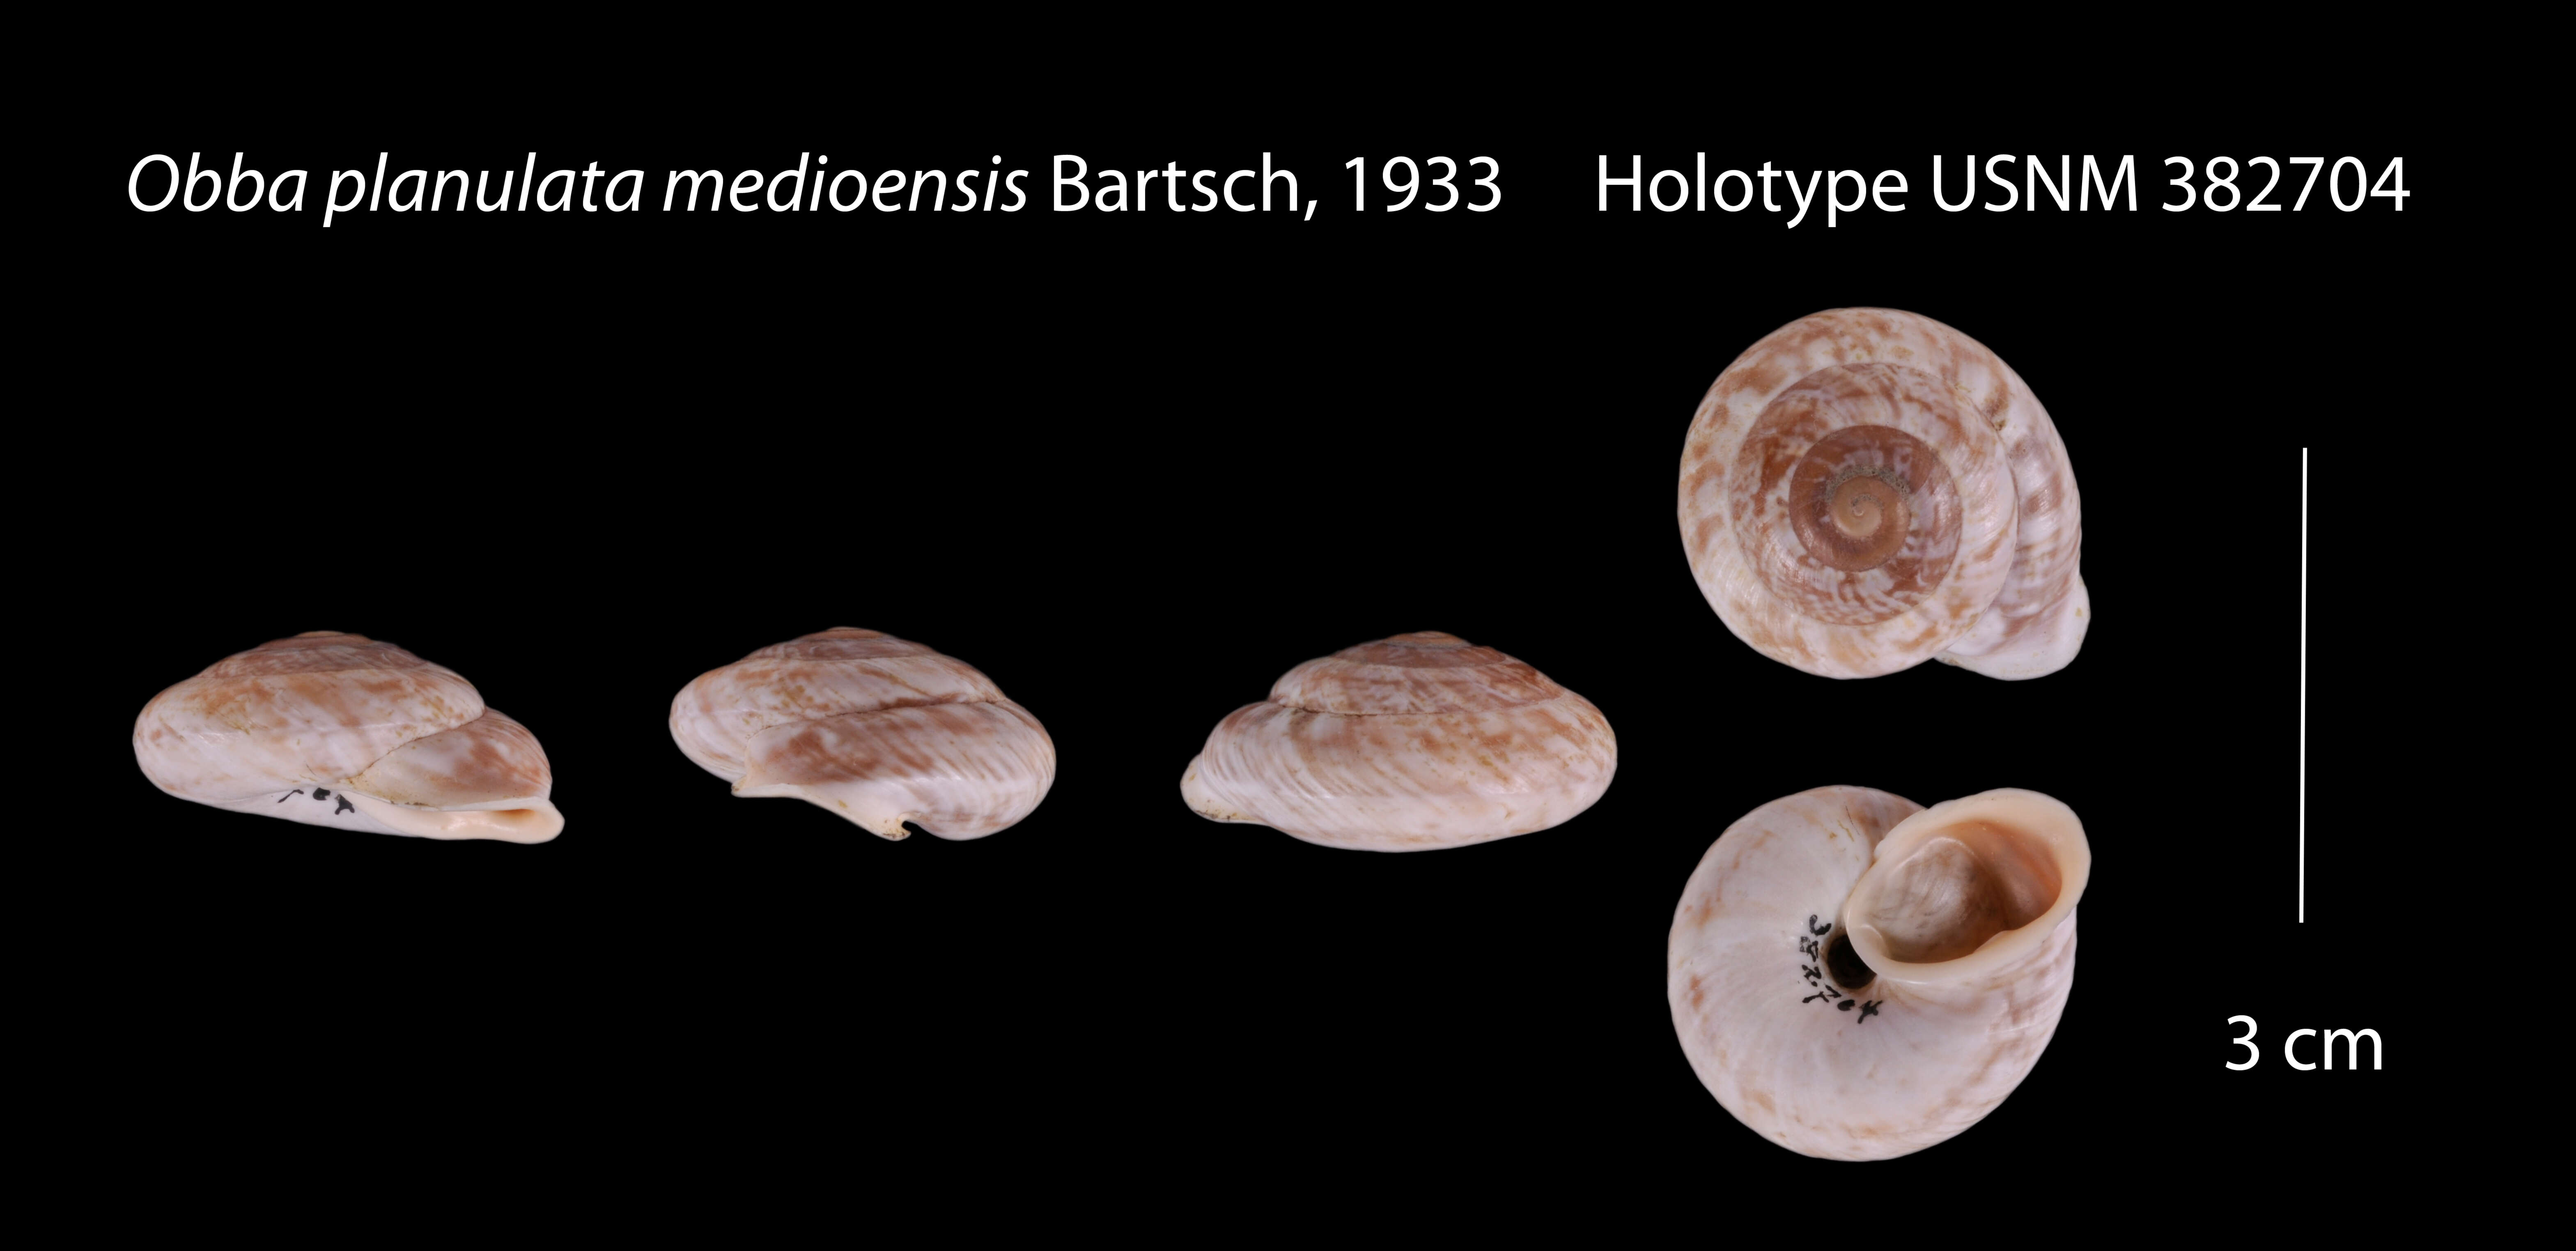 Image of Obba planulata medioensis Bartsch 1933